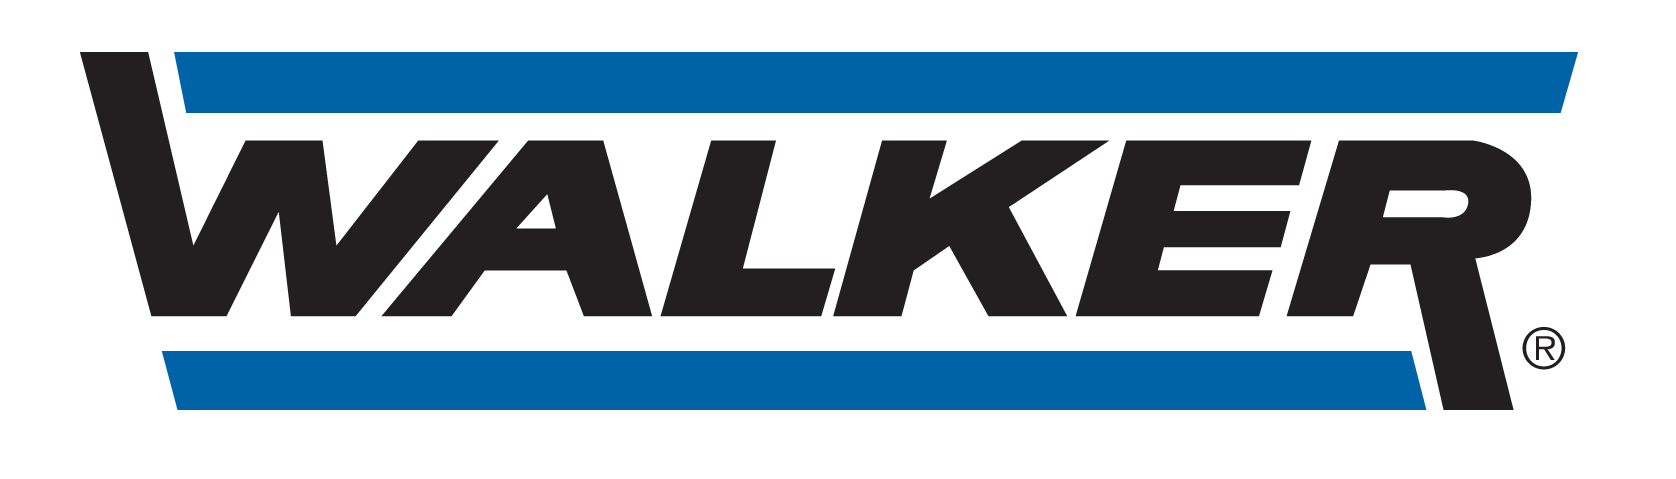 EZEL AUTOMOBILES - logo Walker